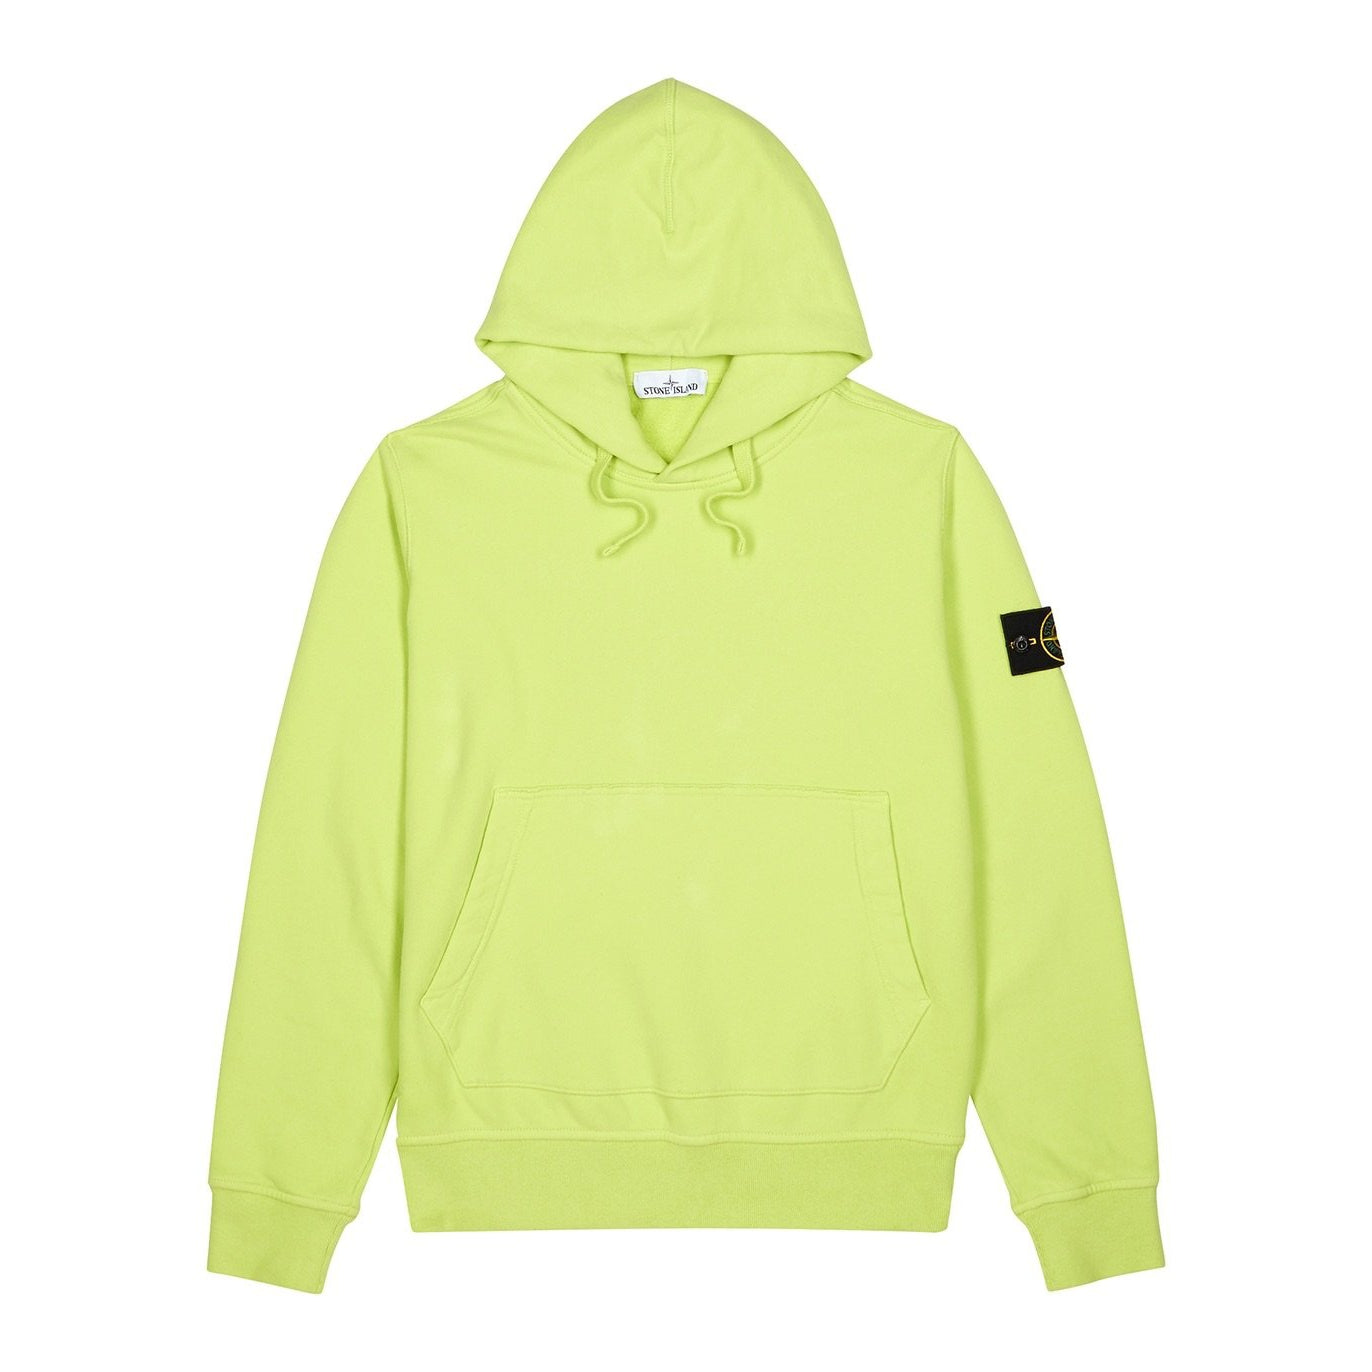 Stone island sweatshirt “lime” - Centrall Online